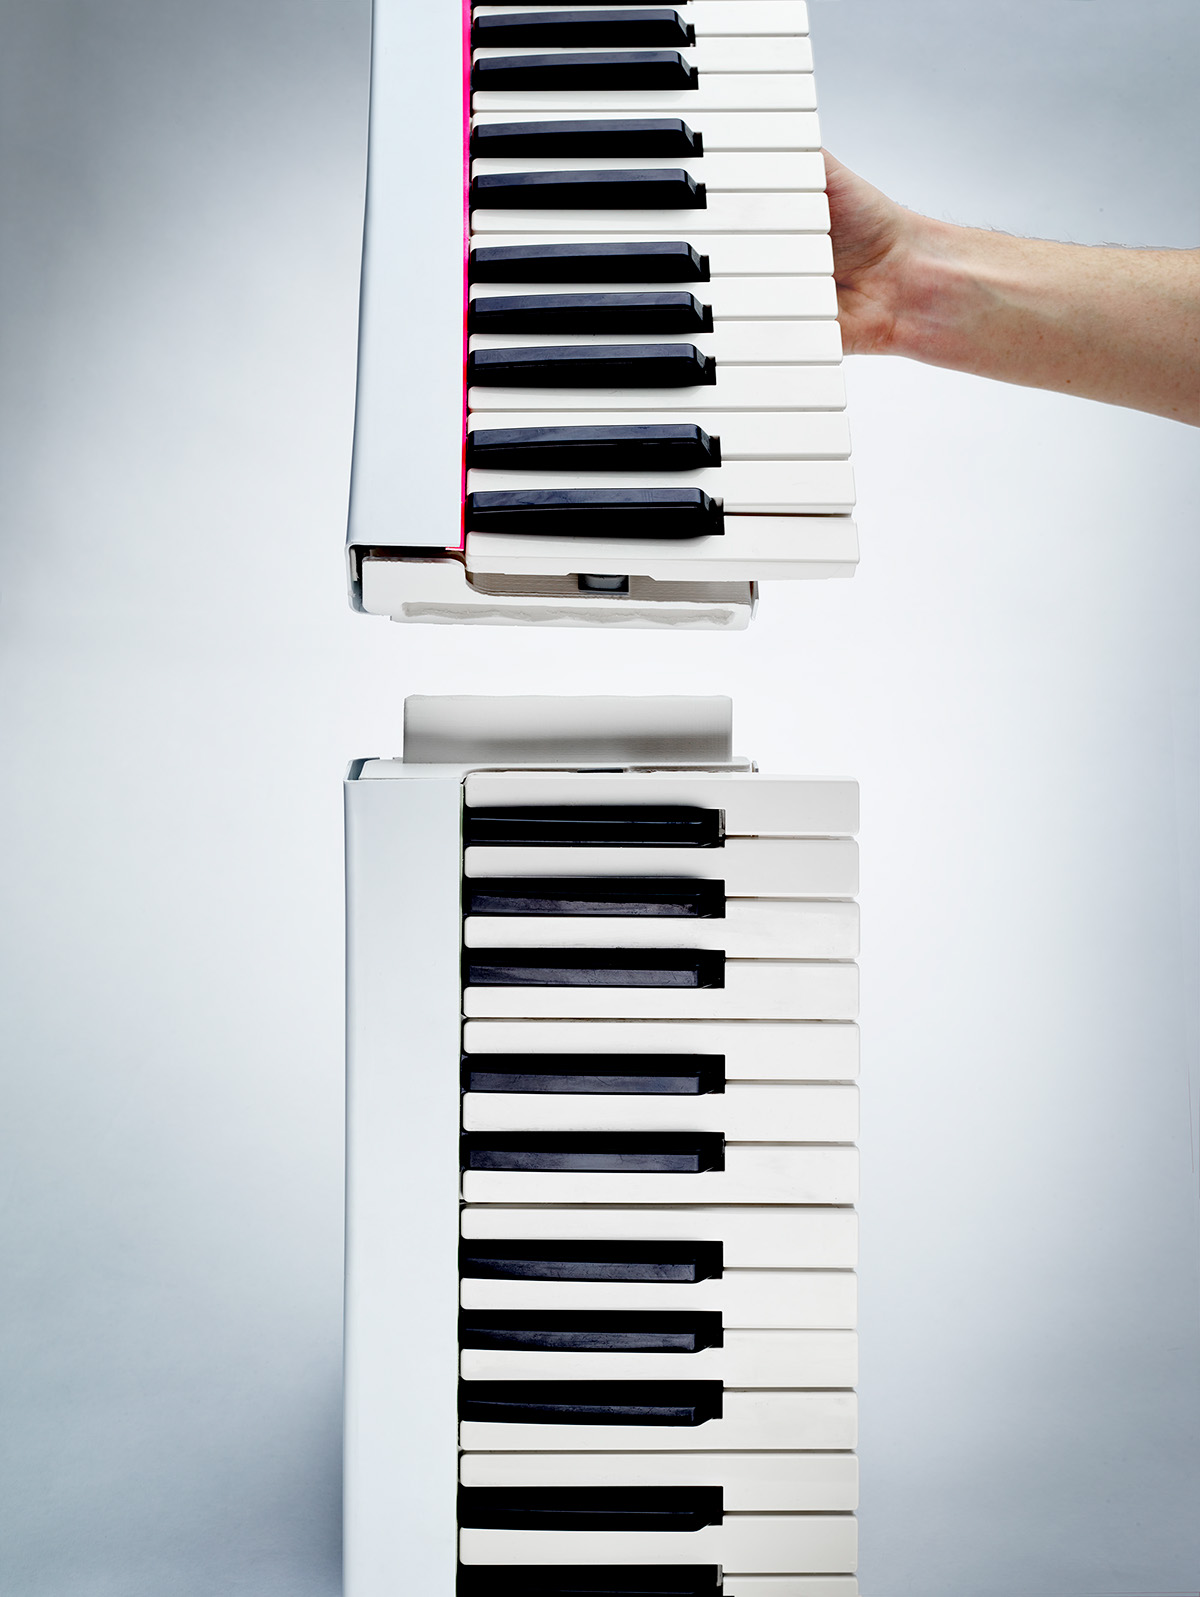 Piano Modular Keyboard Travel Innovative futuristic music on-the-go portable convenient cool